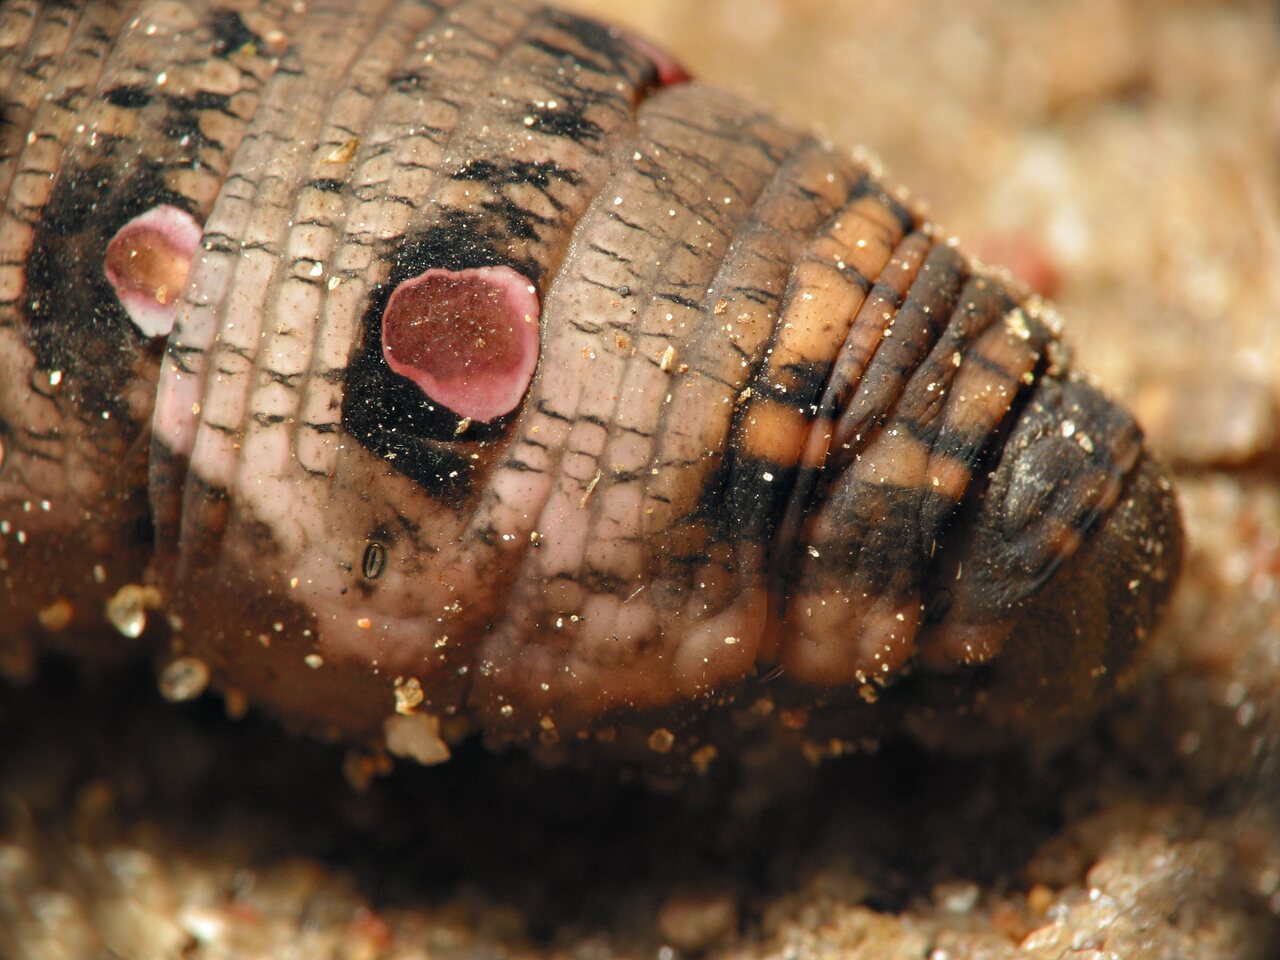 Deilephila-elpenor-larva-6531.jpg